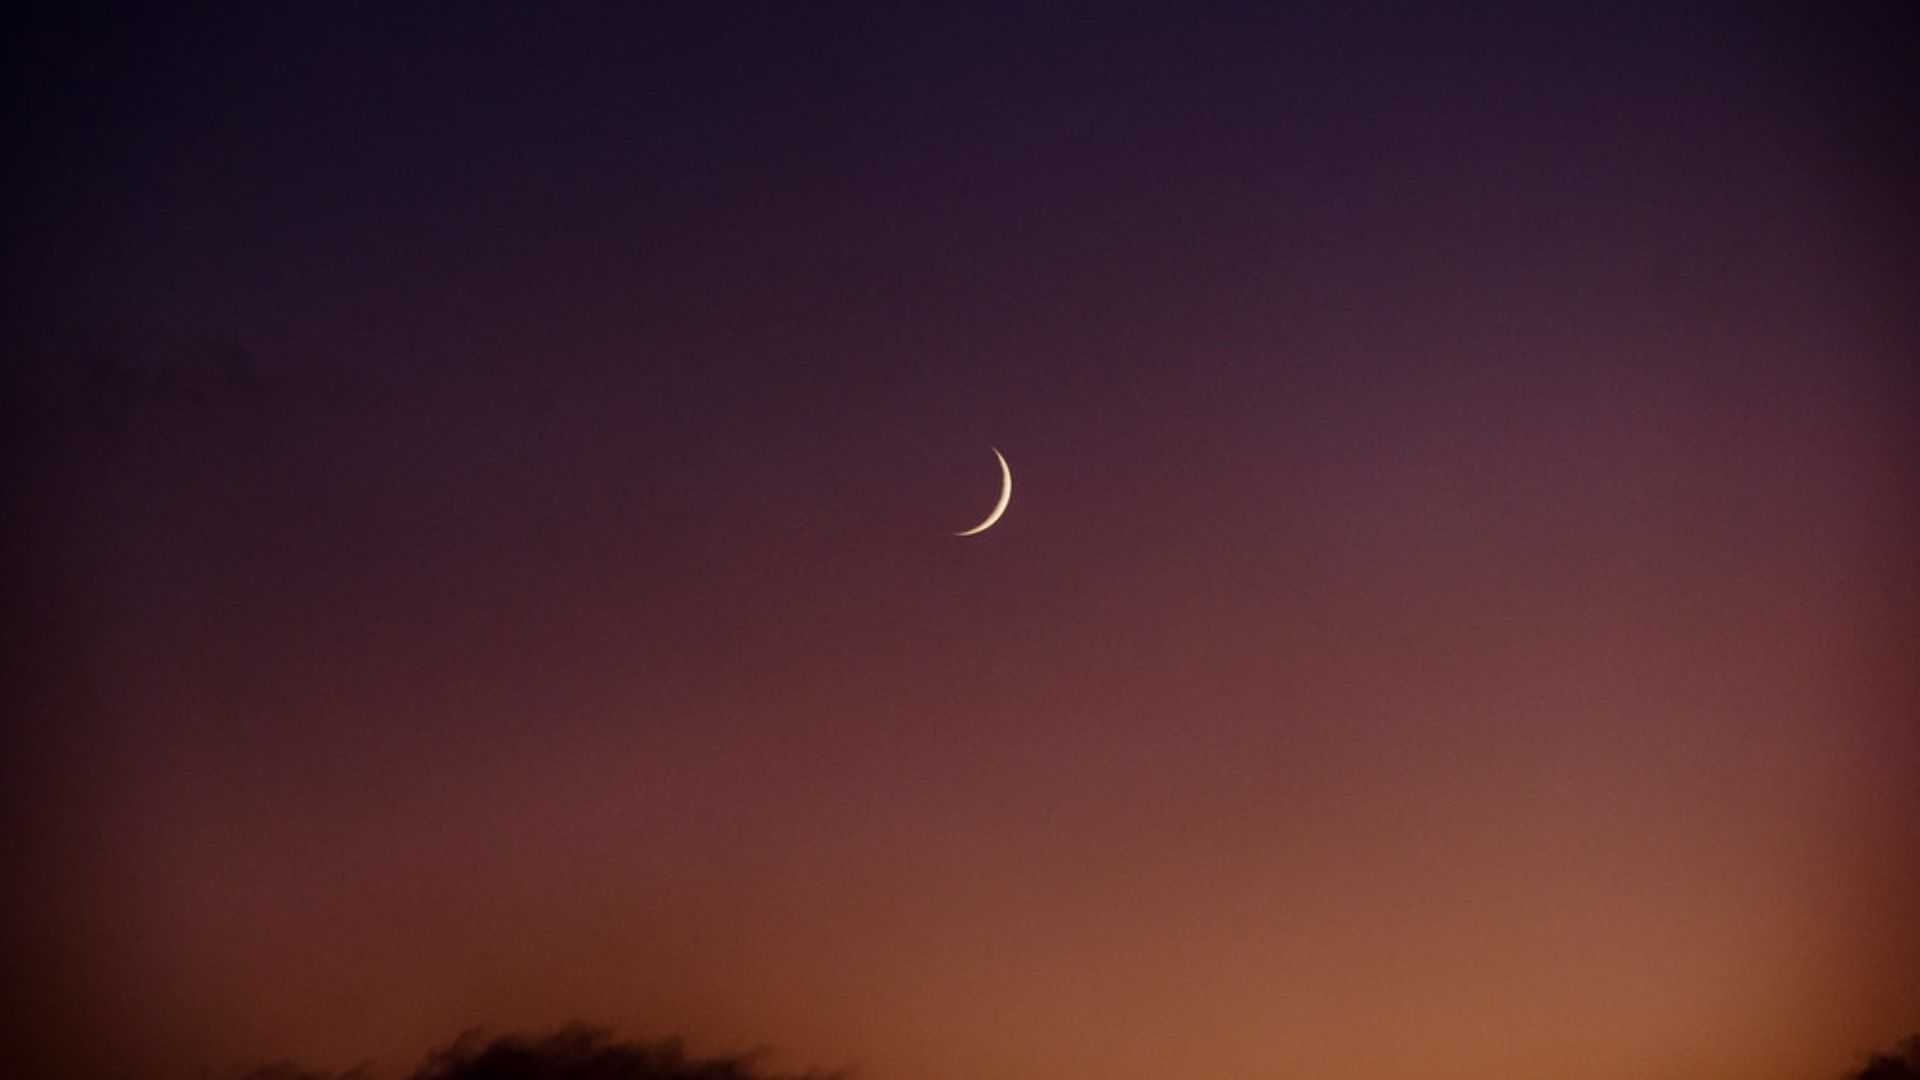 Moon Sighting Ramadan 2024 Deni Nannie